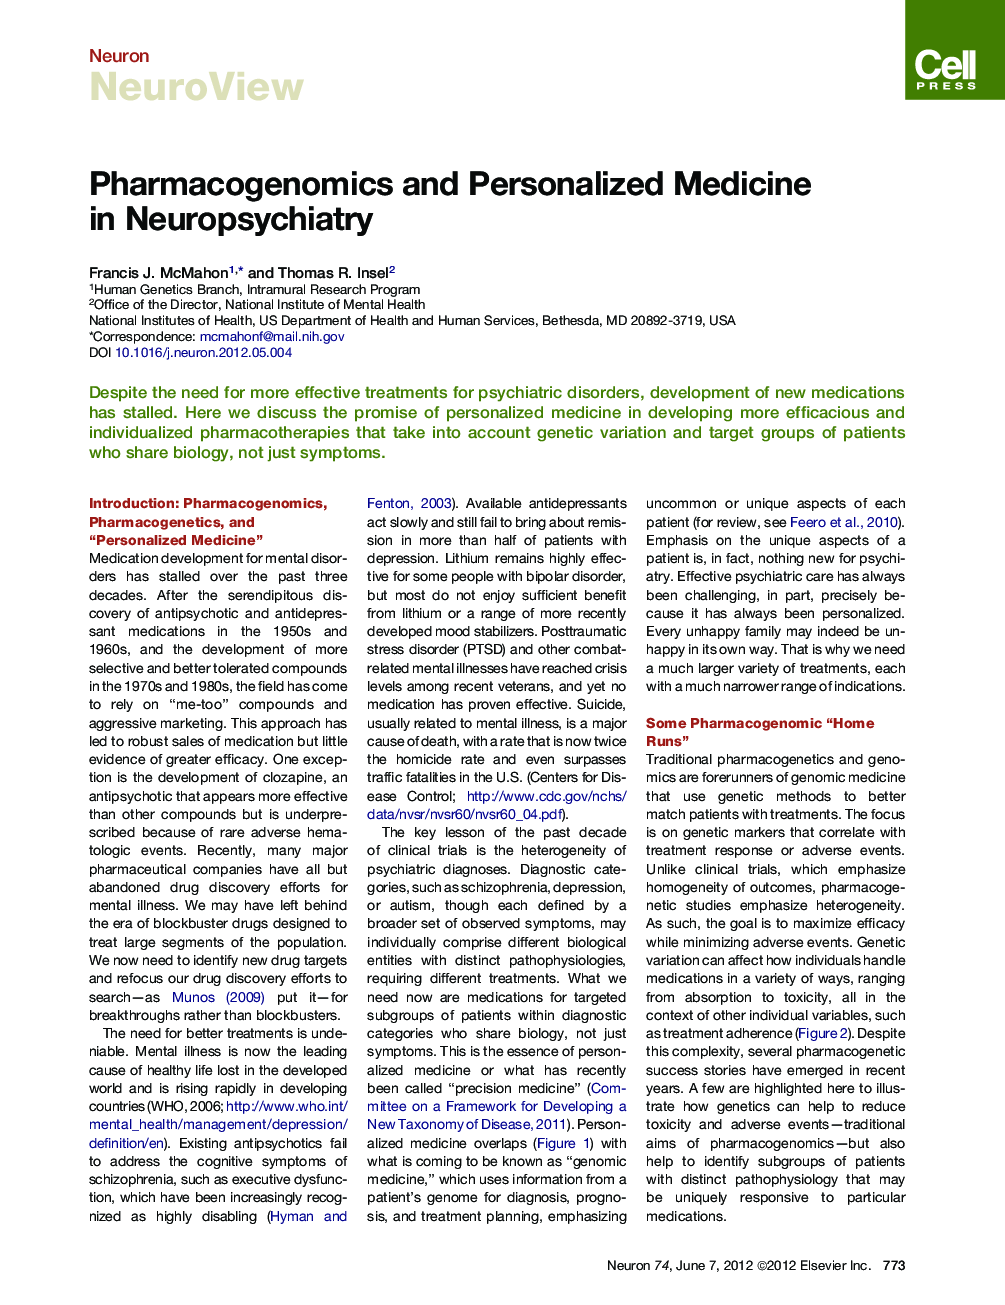 Pharmacogenomics and Personalized Medicine in Neuropsychiatry